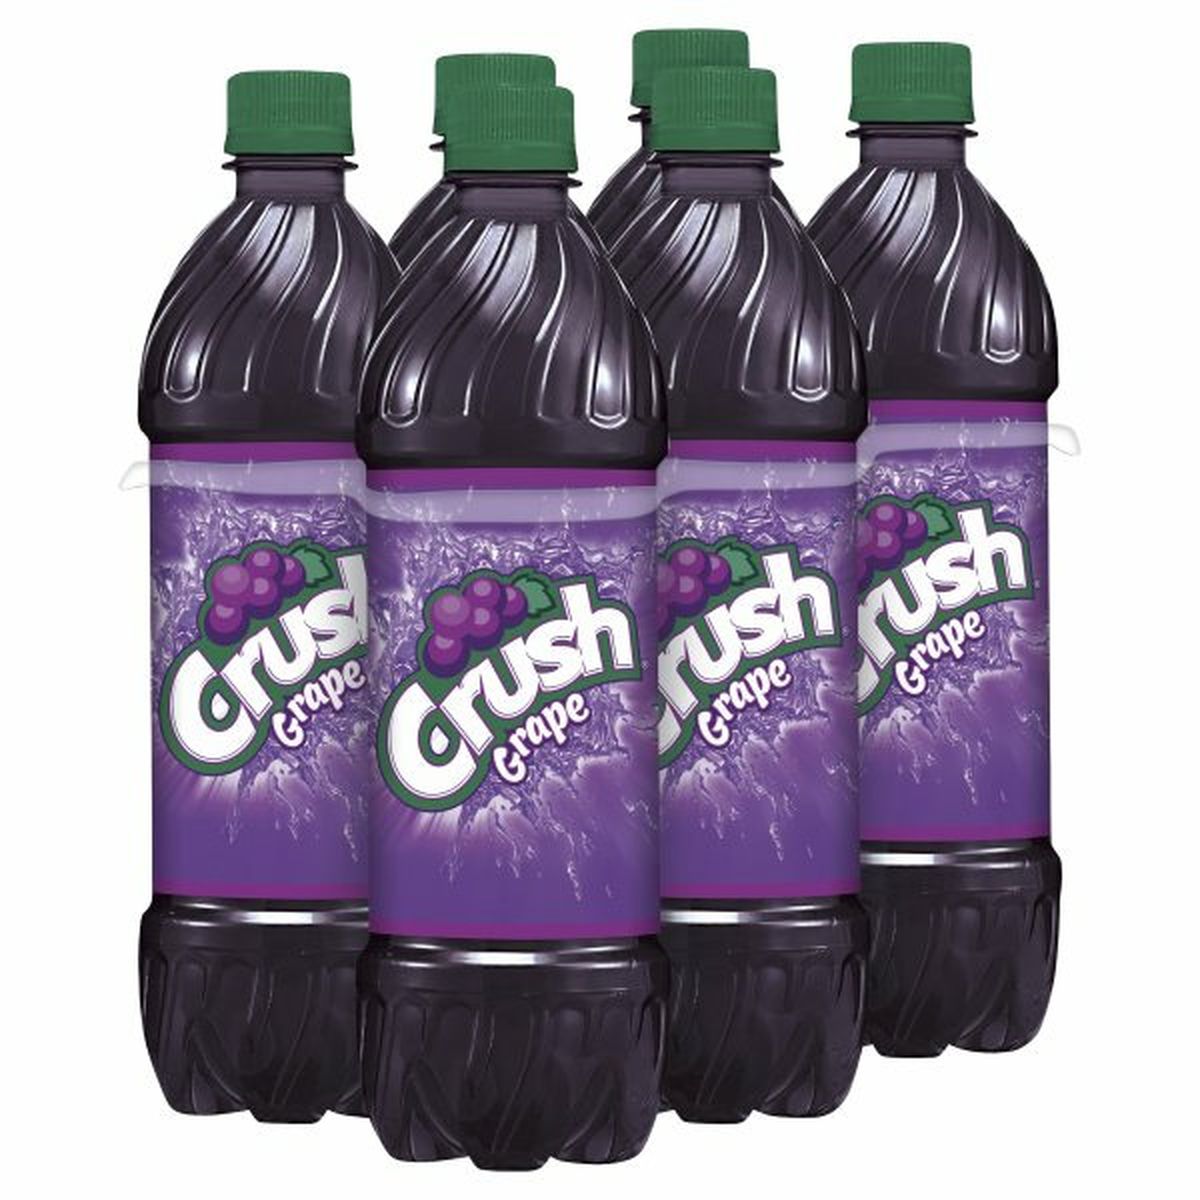 Calories in Crush Grape Soda Soda, Grape, 6 Pack